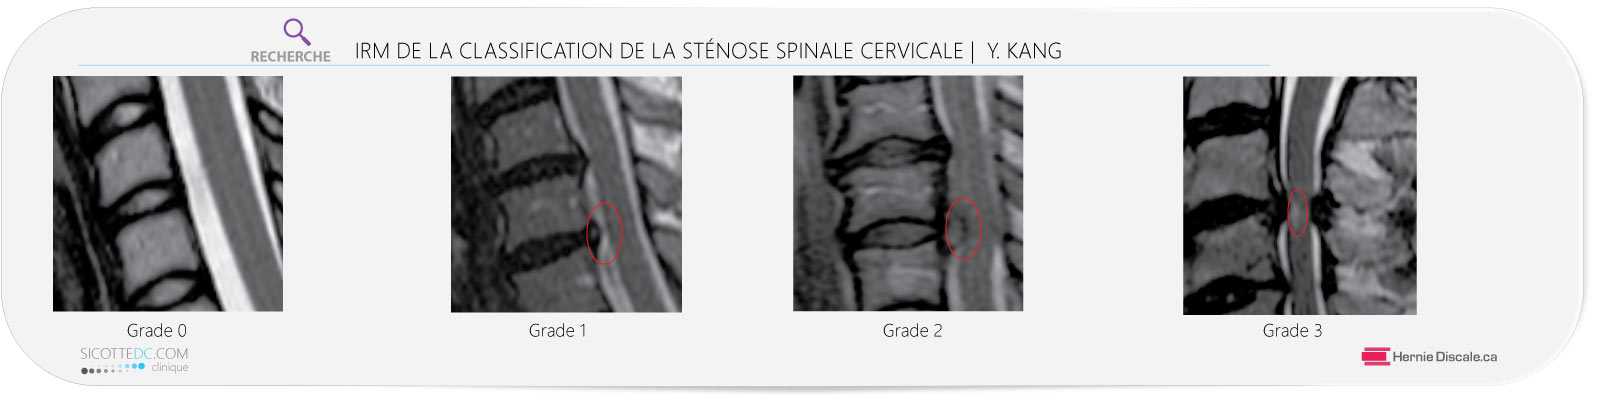 IMR cervicale de sténose spinale cervicale. Grade 0, 1, 2, 3